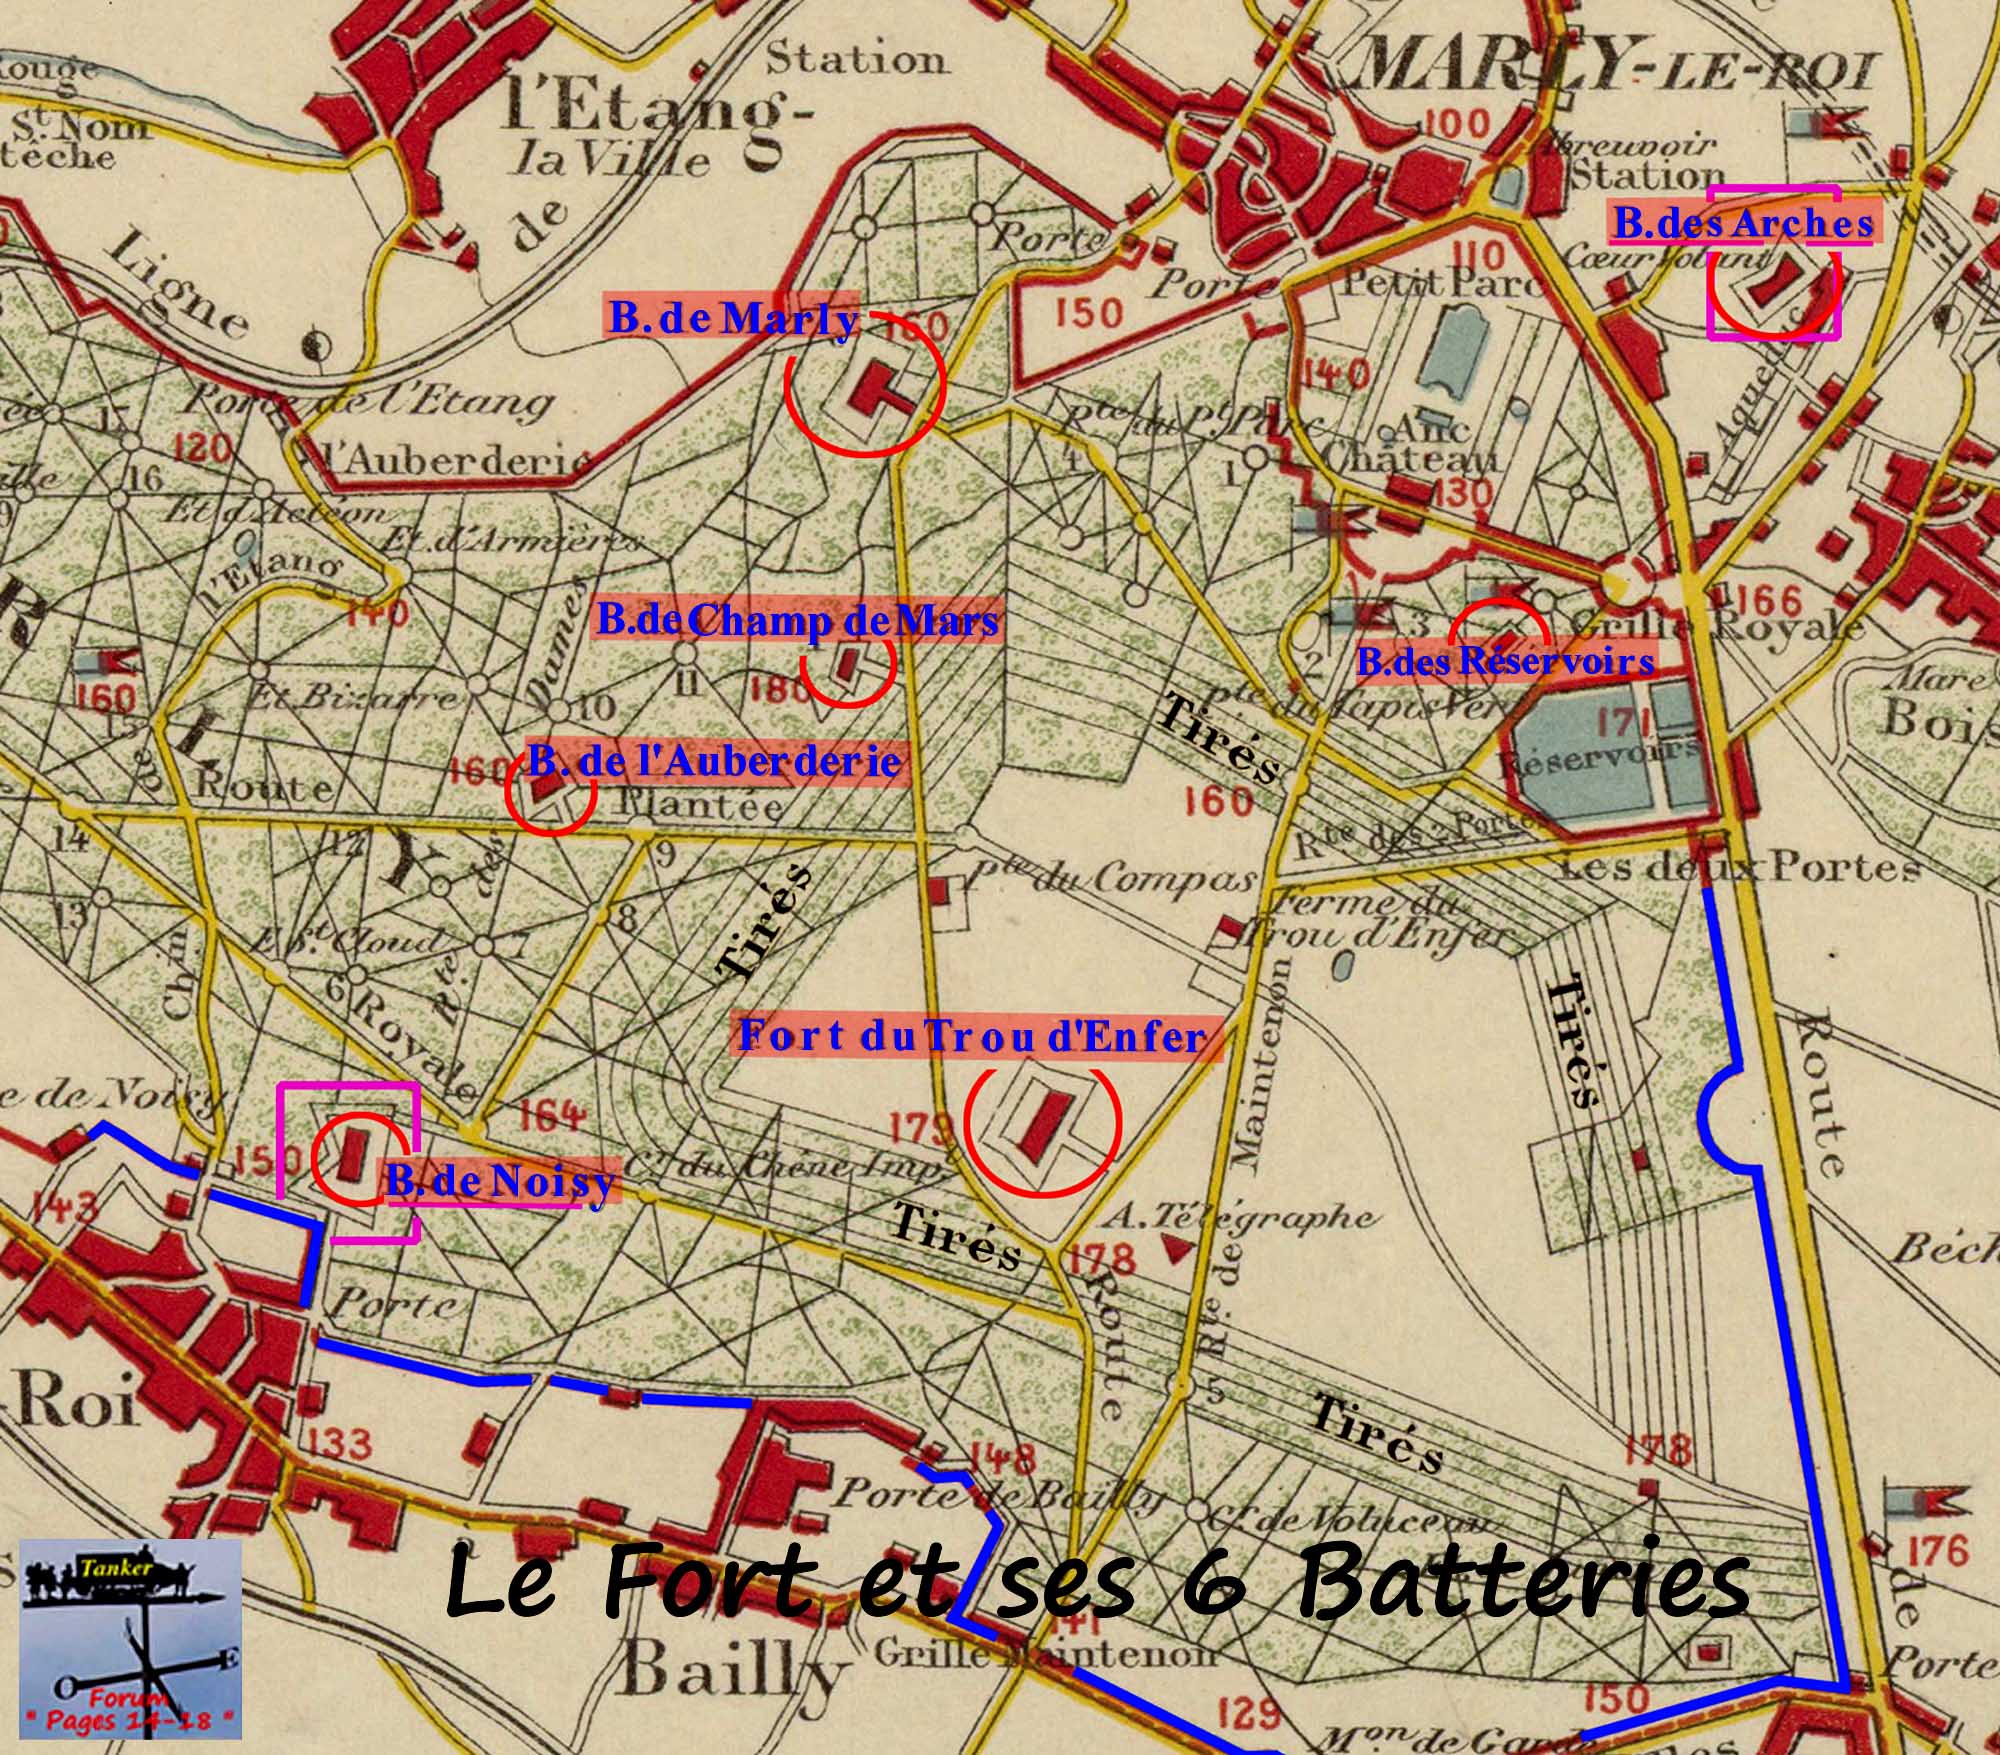 06 - Fort et Batteries du Trou d'Enfer (01a1).jpg